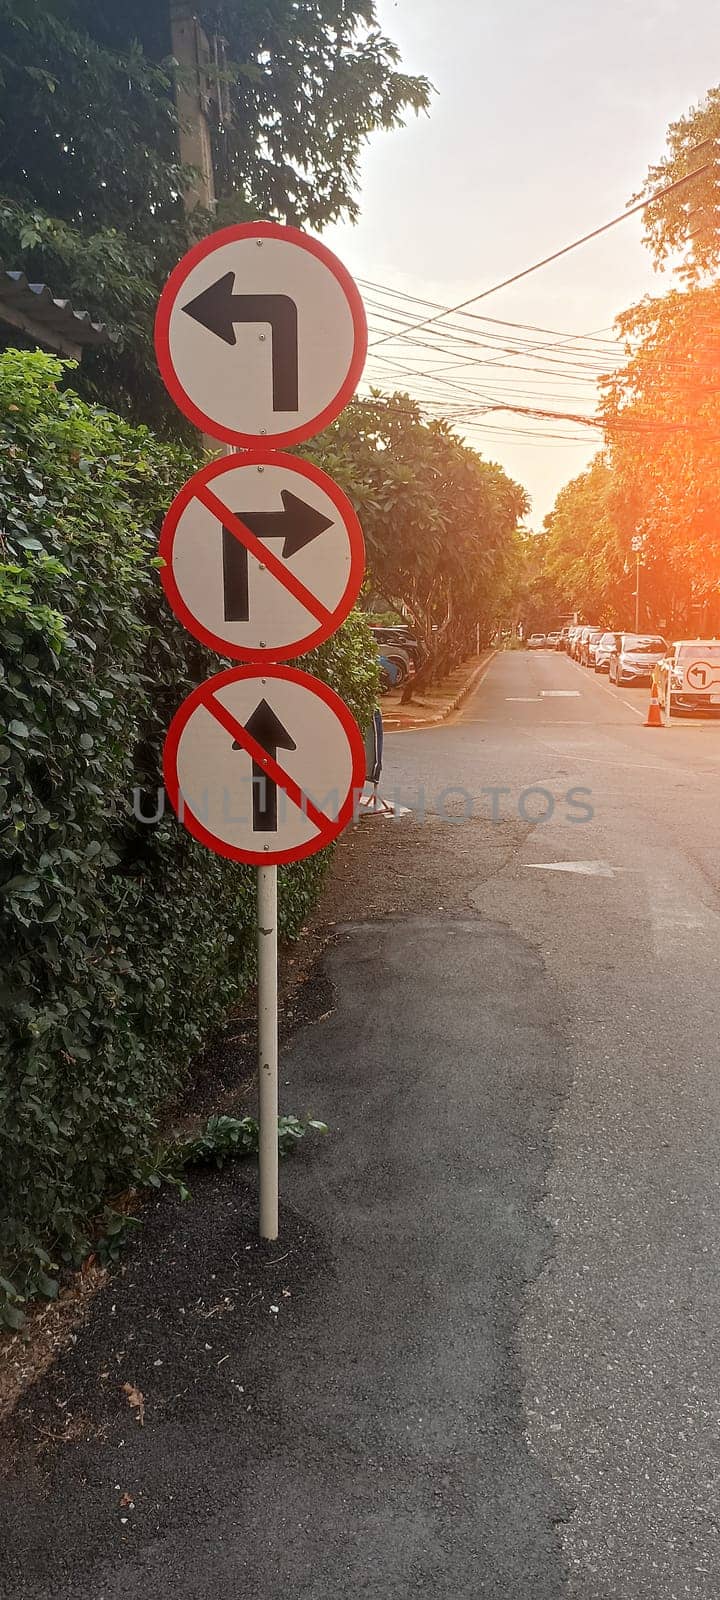 Traffic signs: Do not turn right, do not go straight, turn left. by boonruen